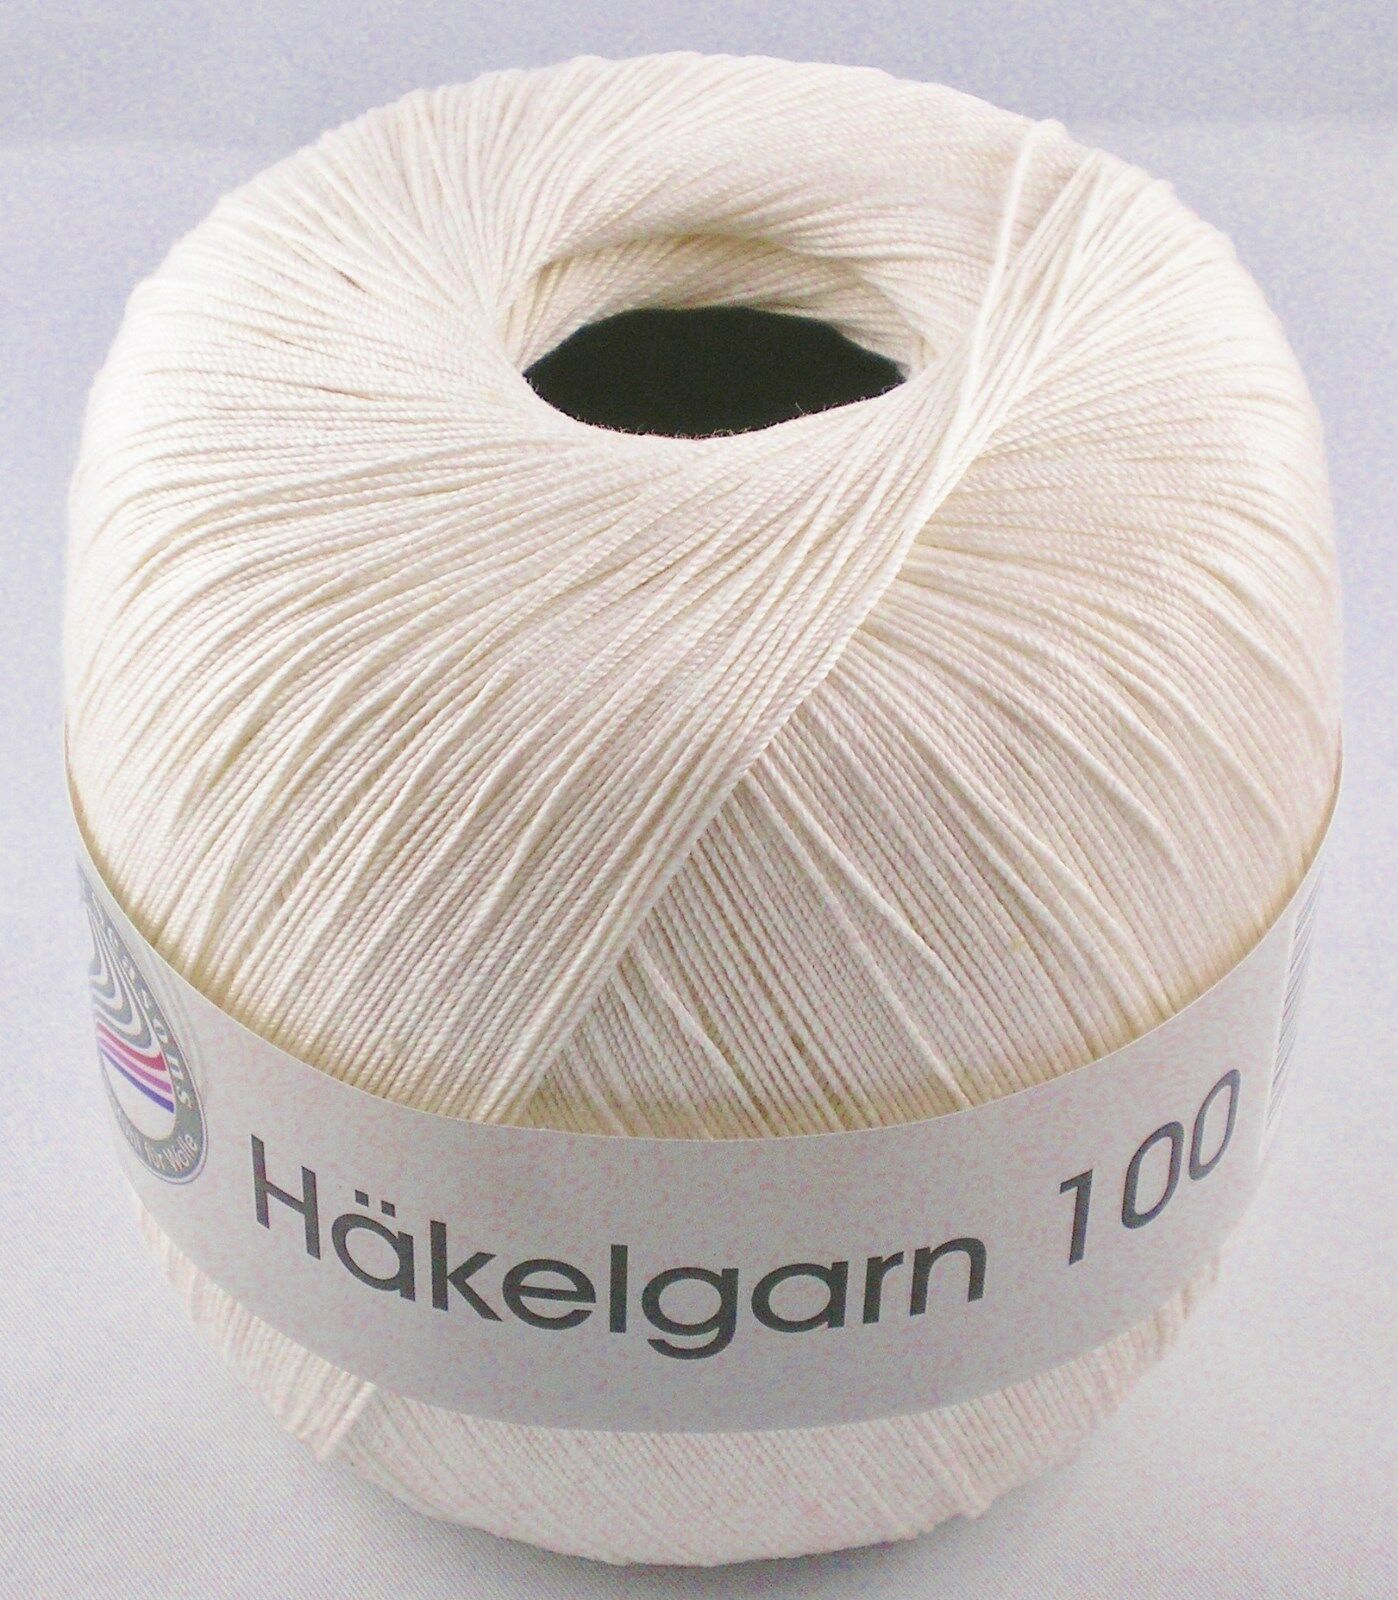 HAKELGARN 100 fil coton à crocheter - Grundl - certifié Oeko-Tex